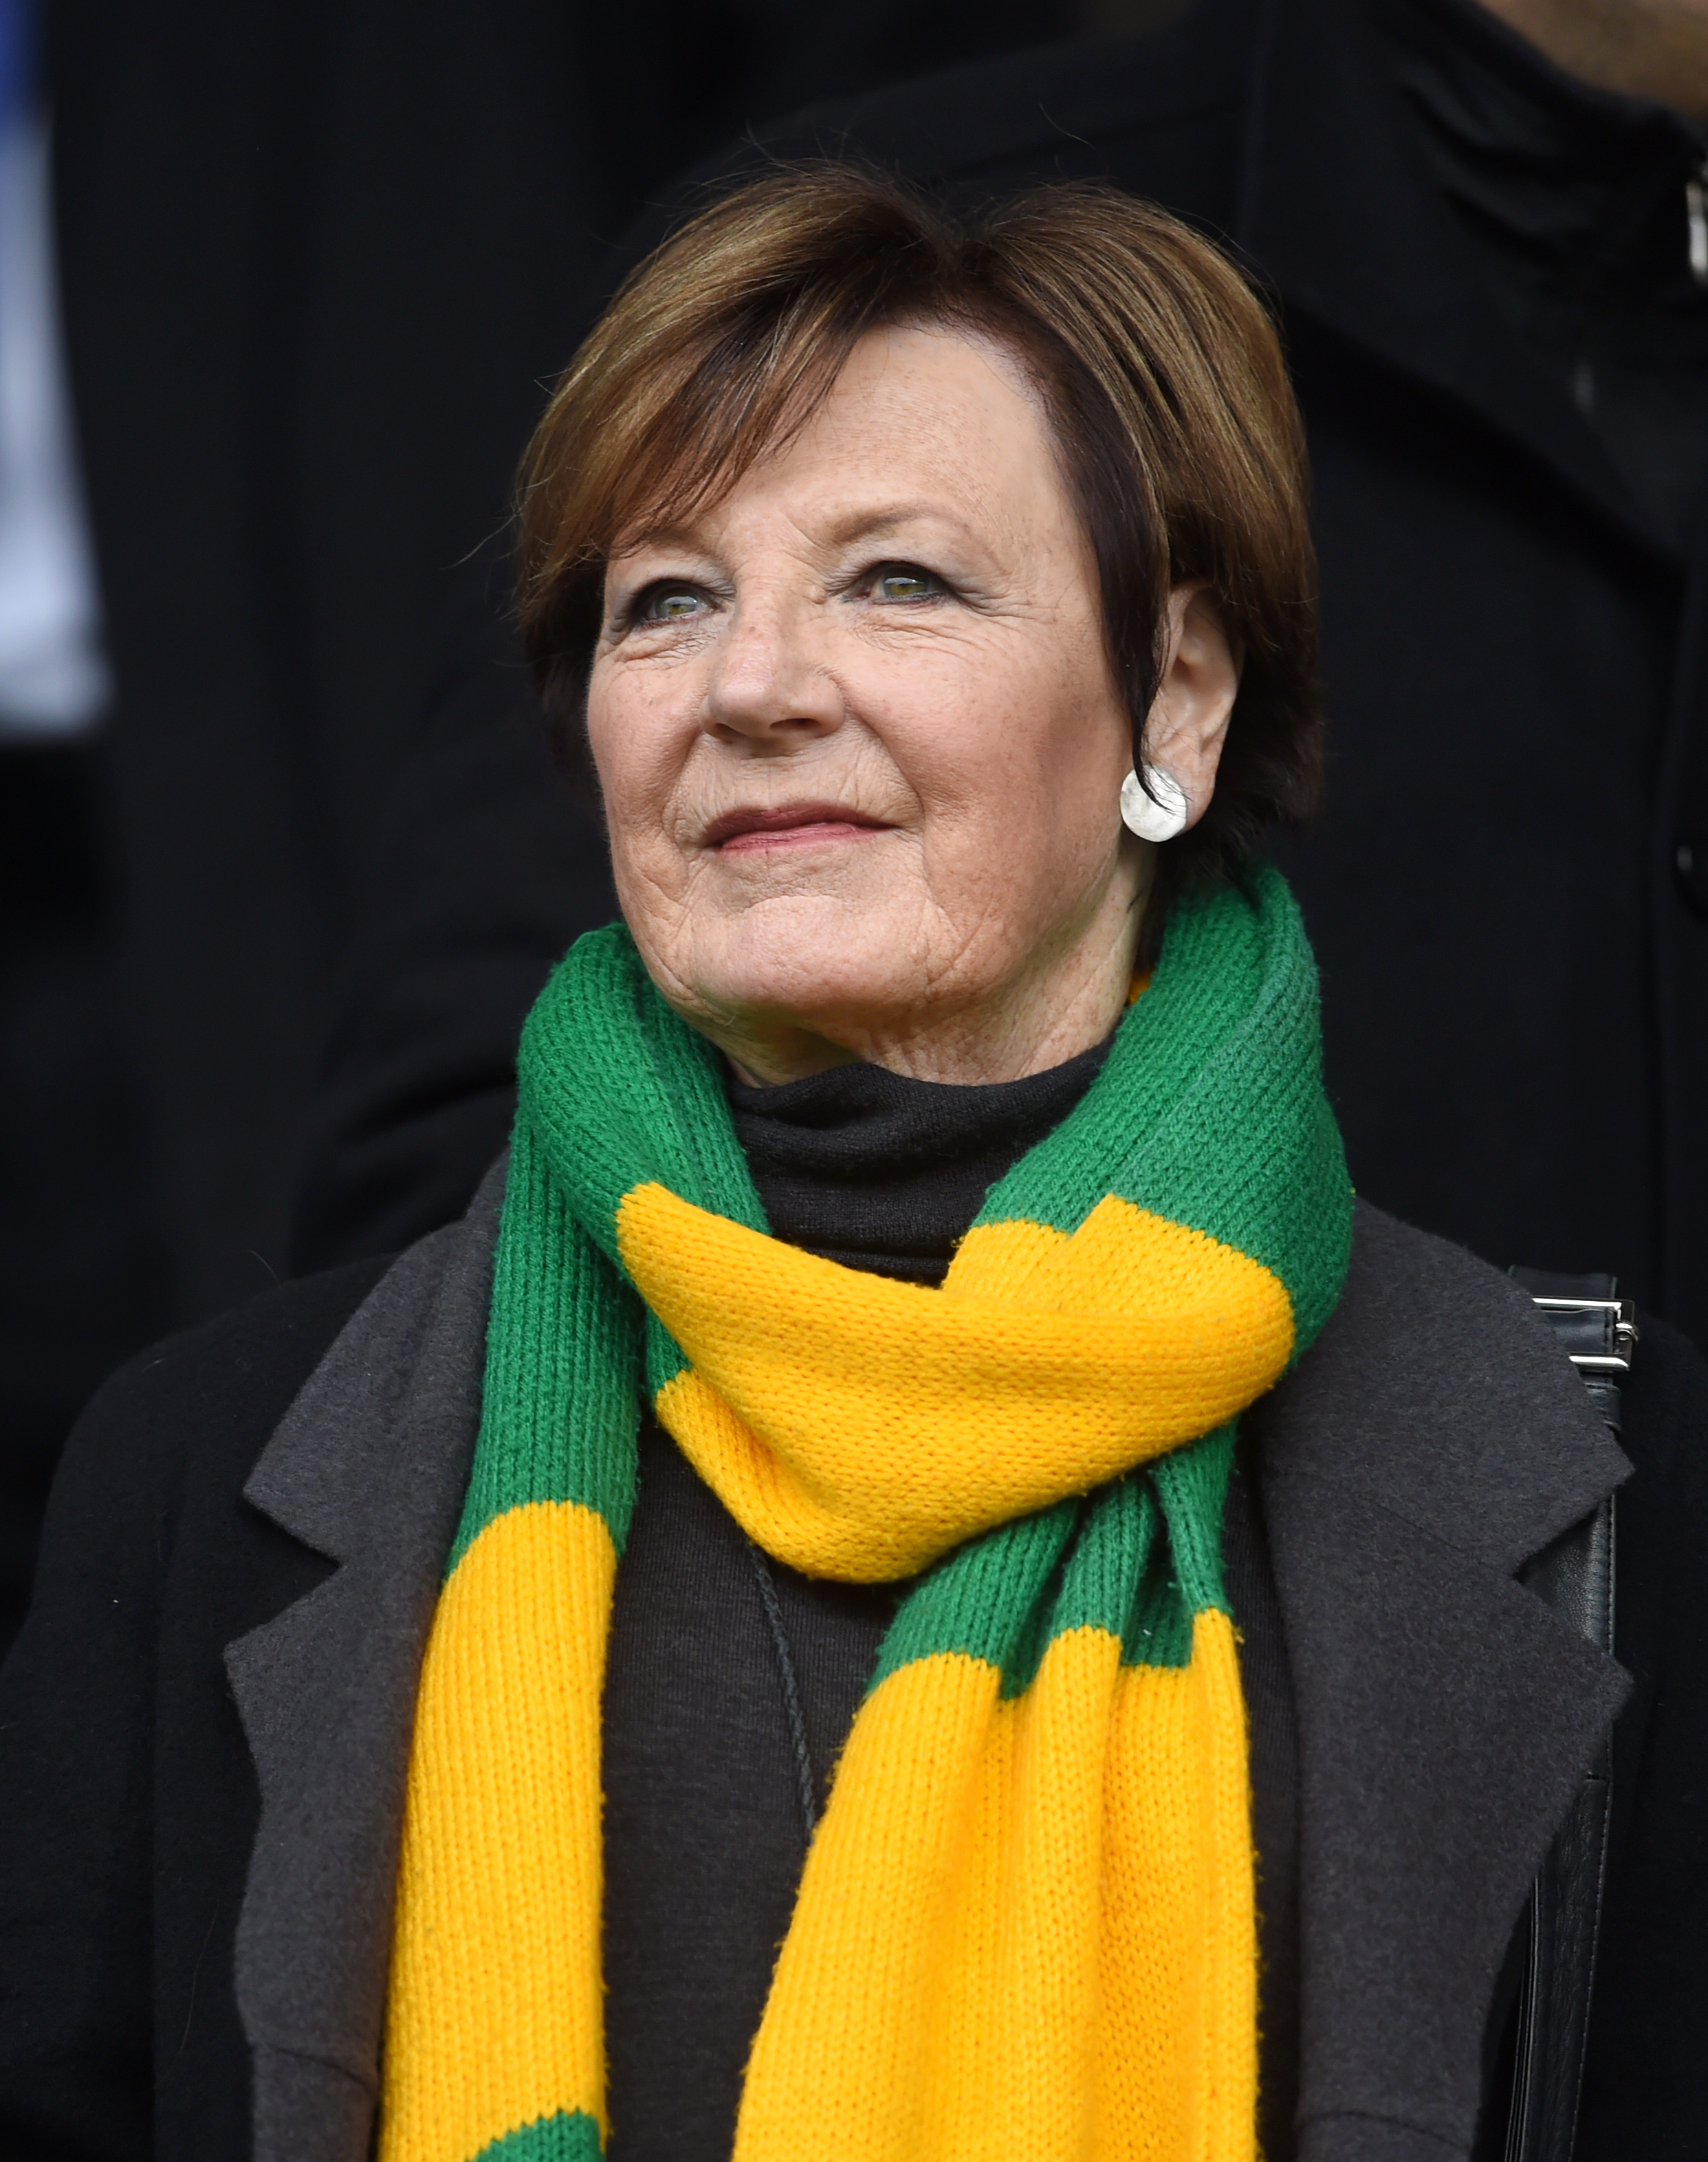 Delia Smith at a Norwich City match (Joe Giddens/PA)